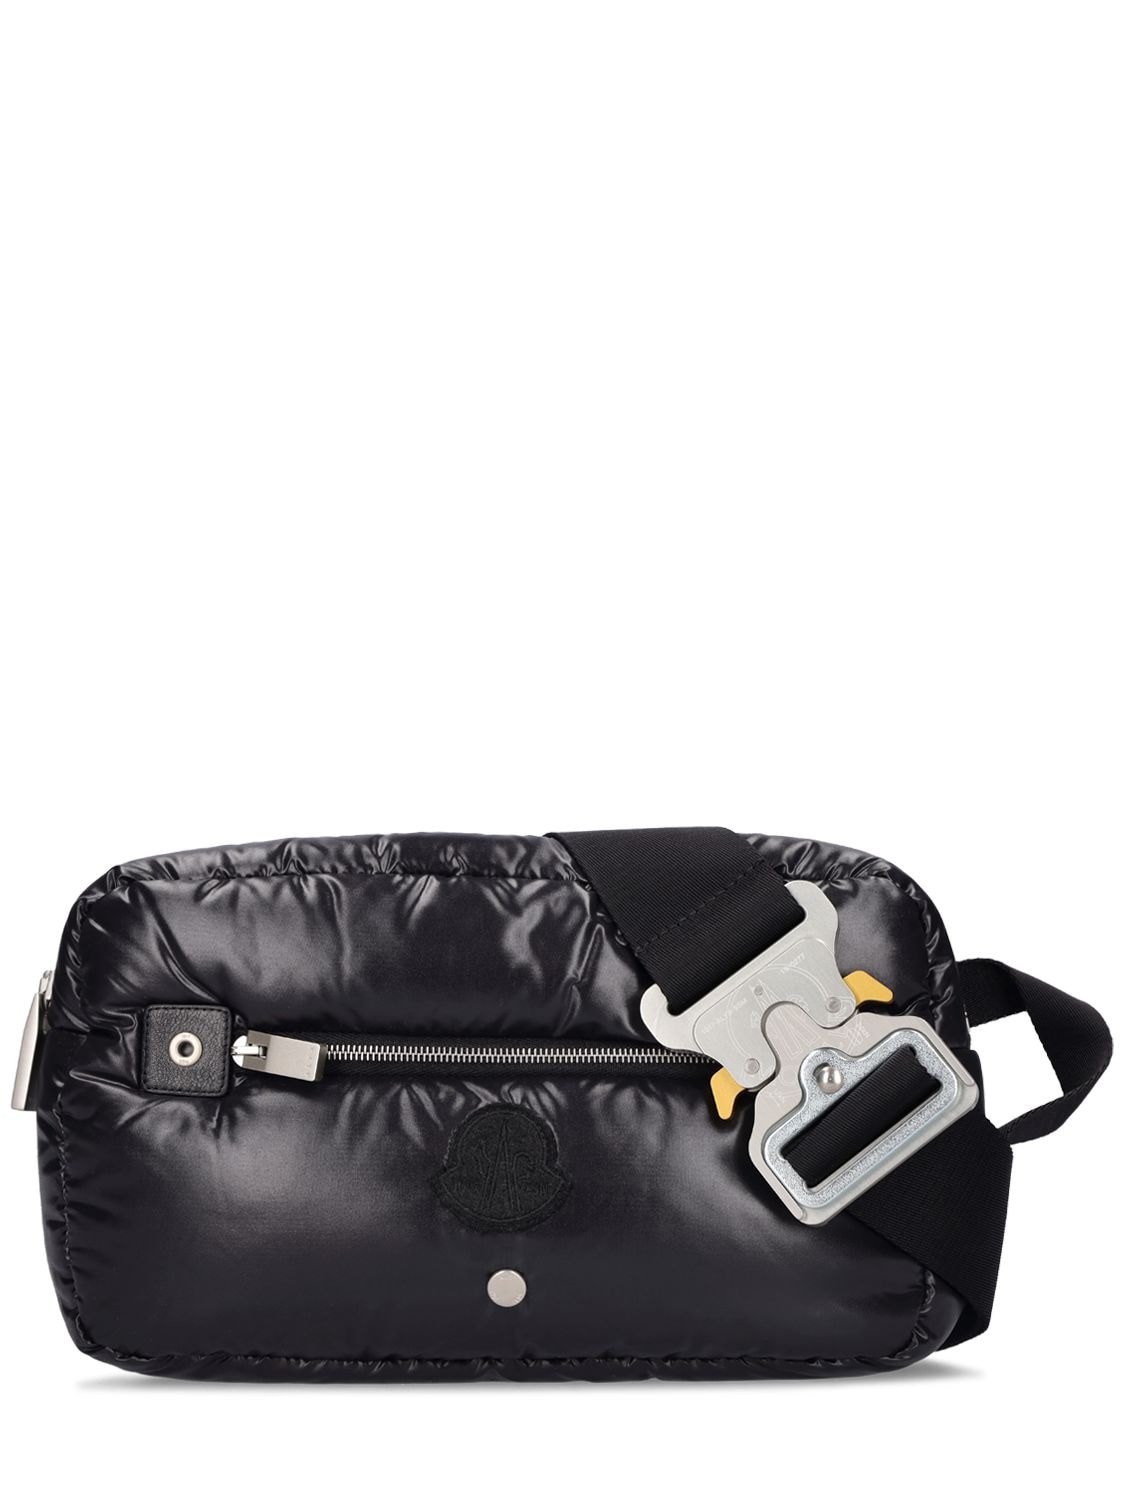 Moncler Genius Belt Bag In Black